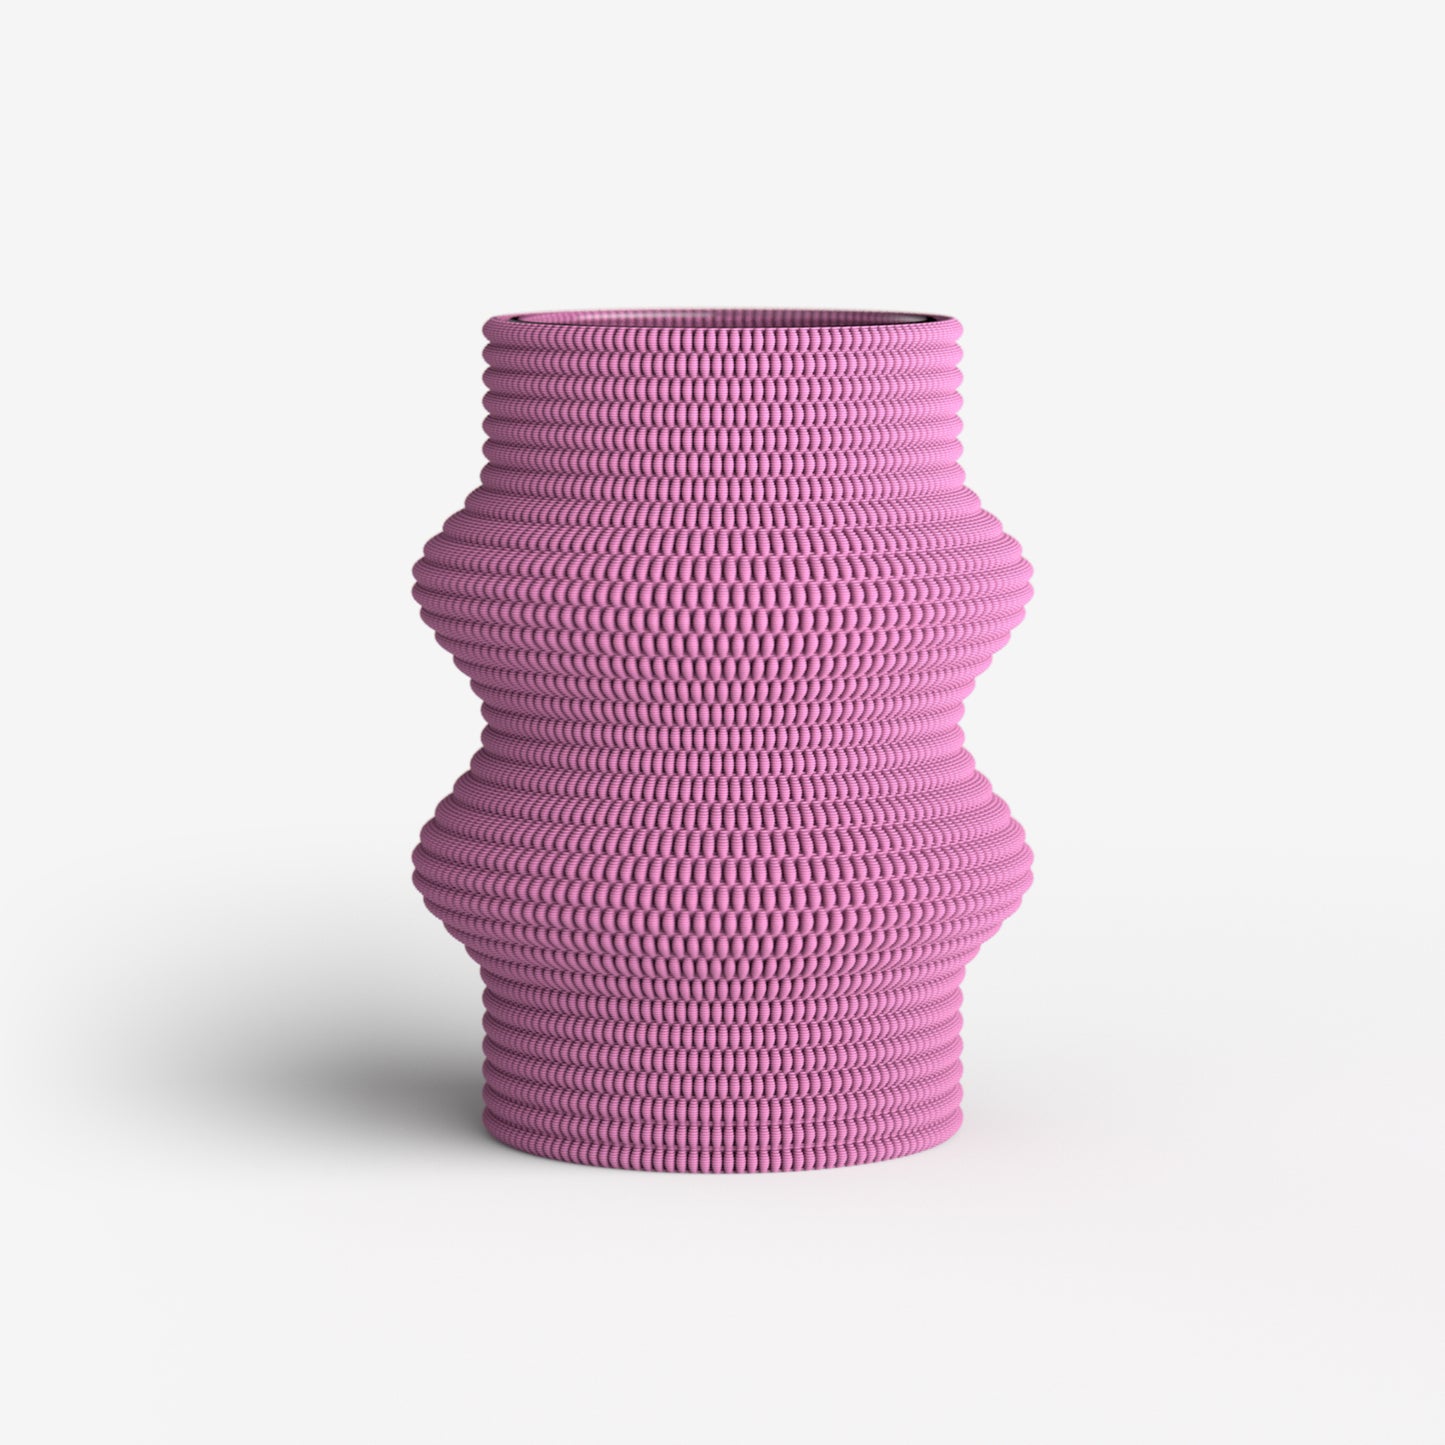 Weave Vase 02